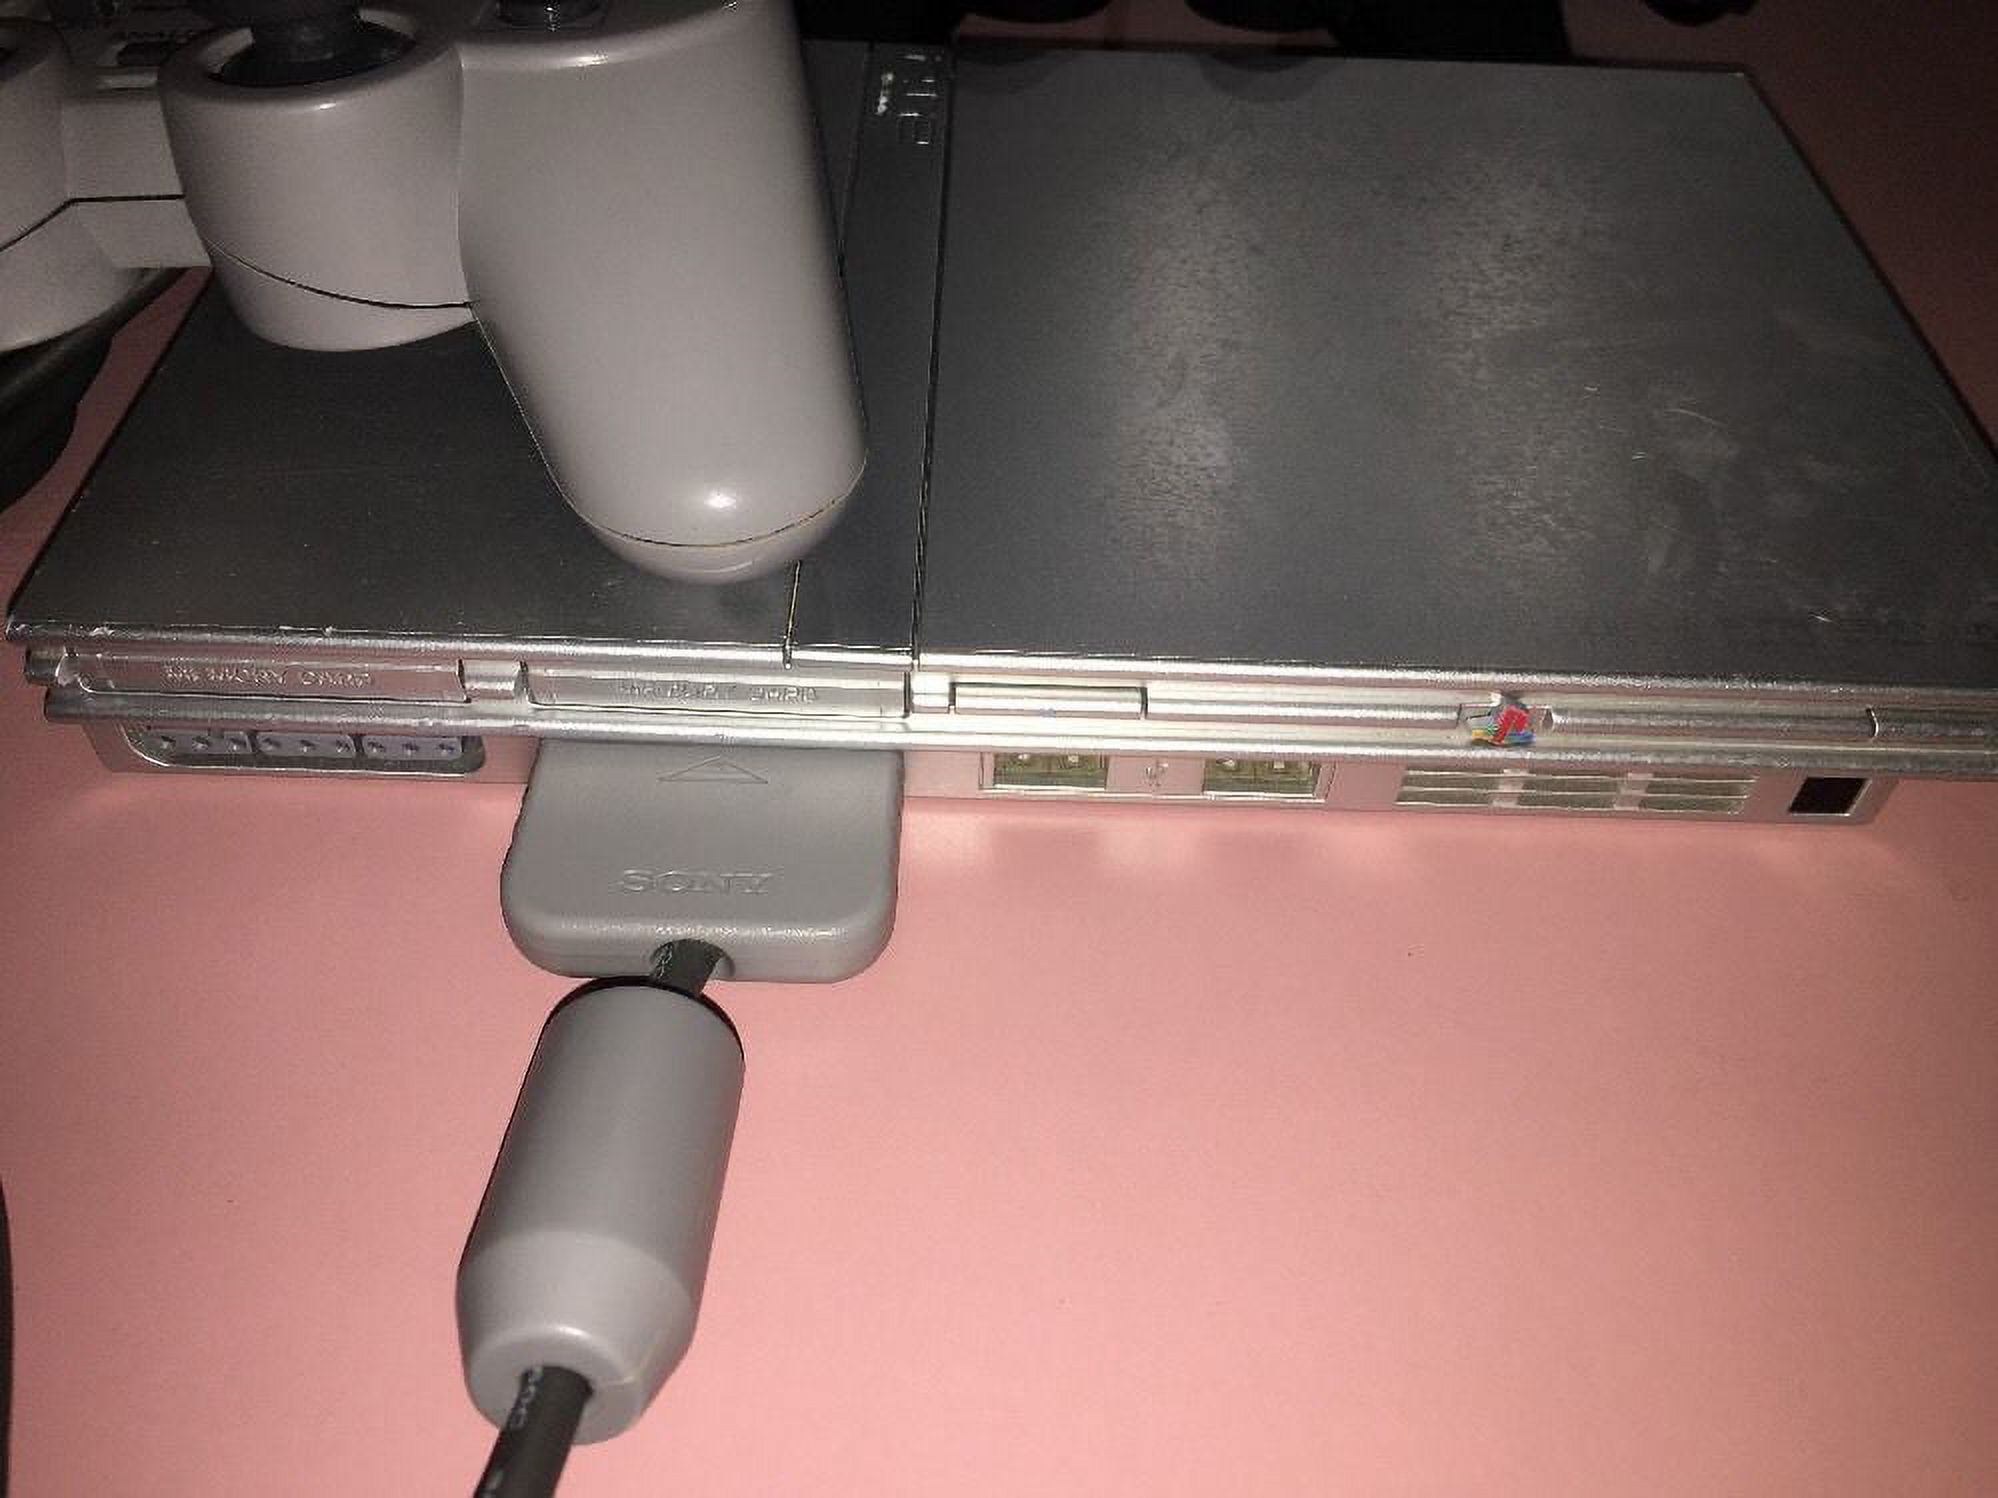 Restored PlayStation 2 PS2 Slim Console System (Refurbished)